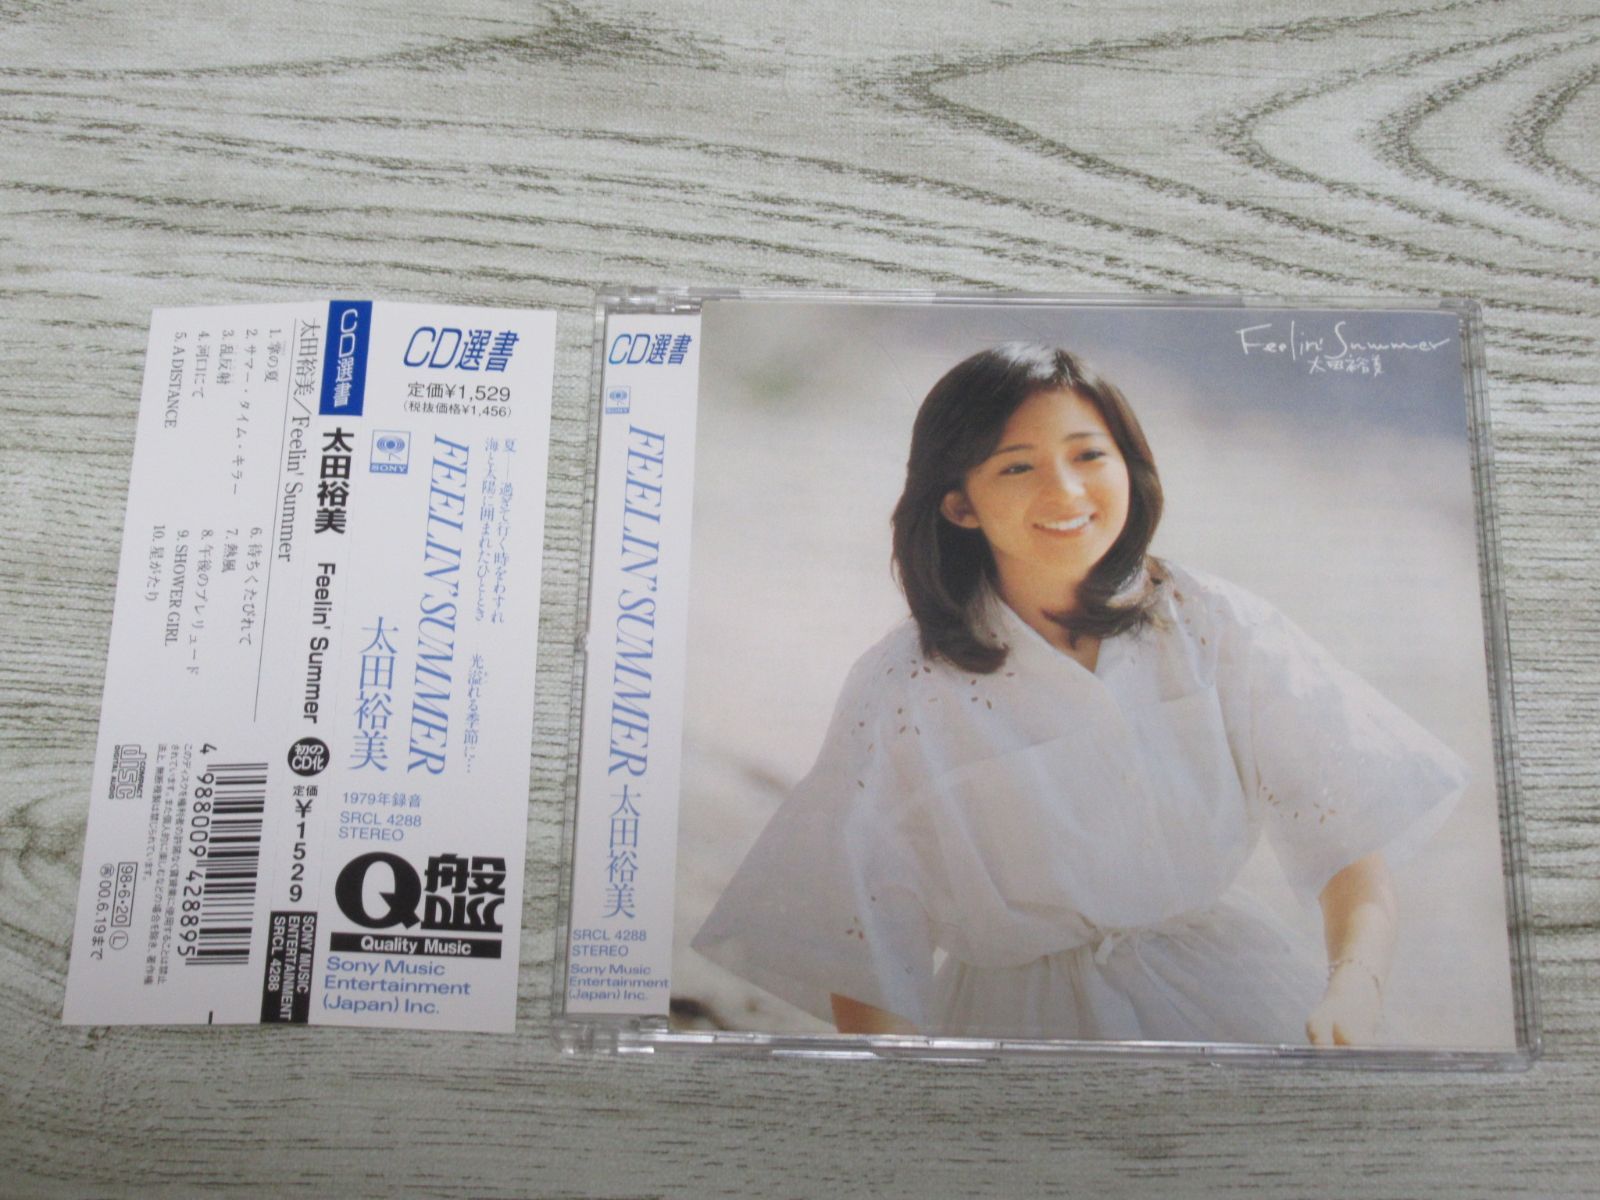 CD 太田裕美 FEELIN SUMMER 帯付 CD選書 SRCL-4088 全10曲 - メルカリ